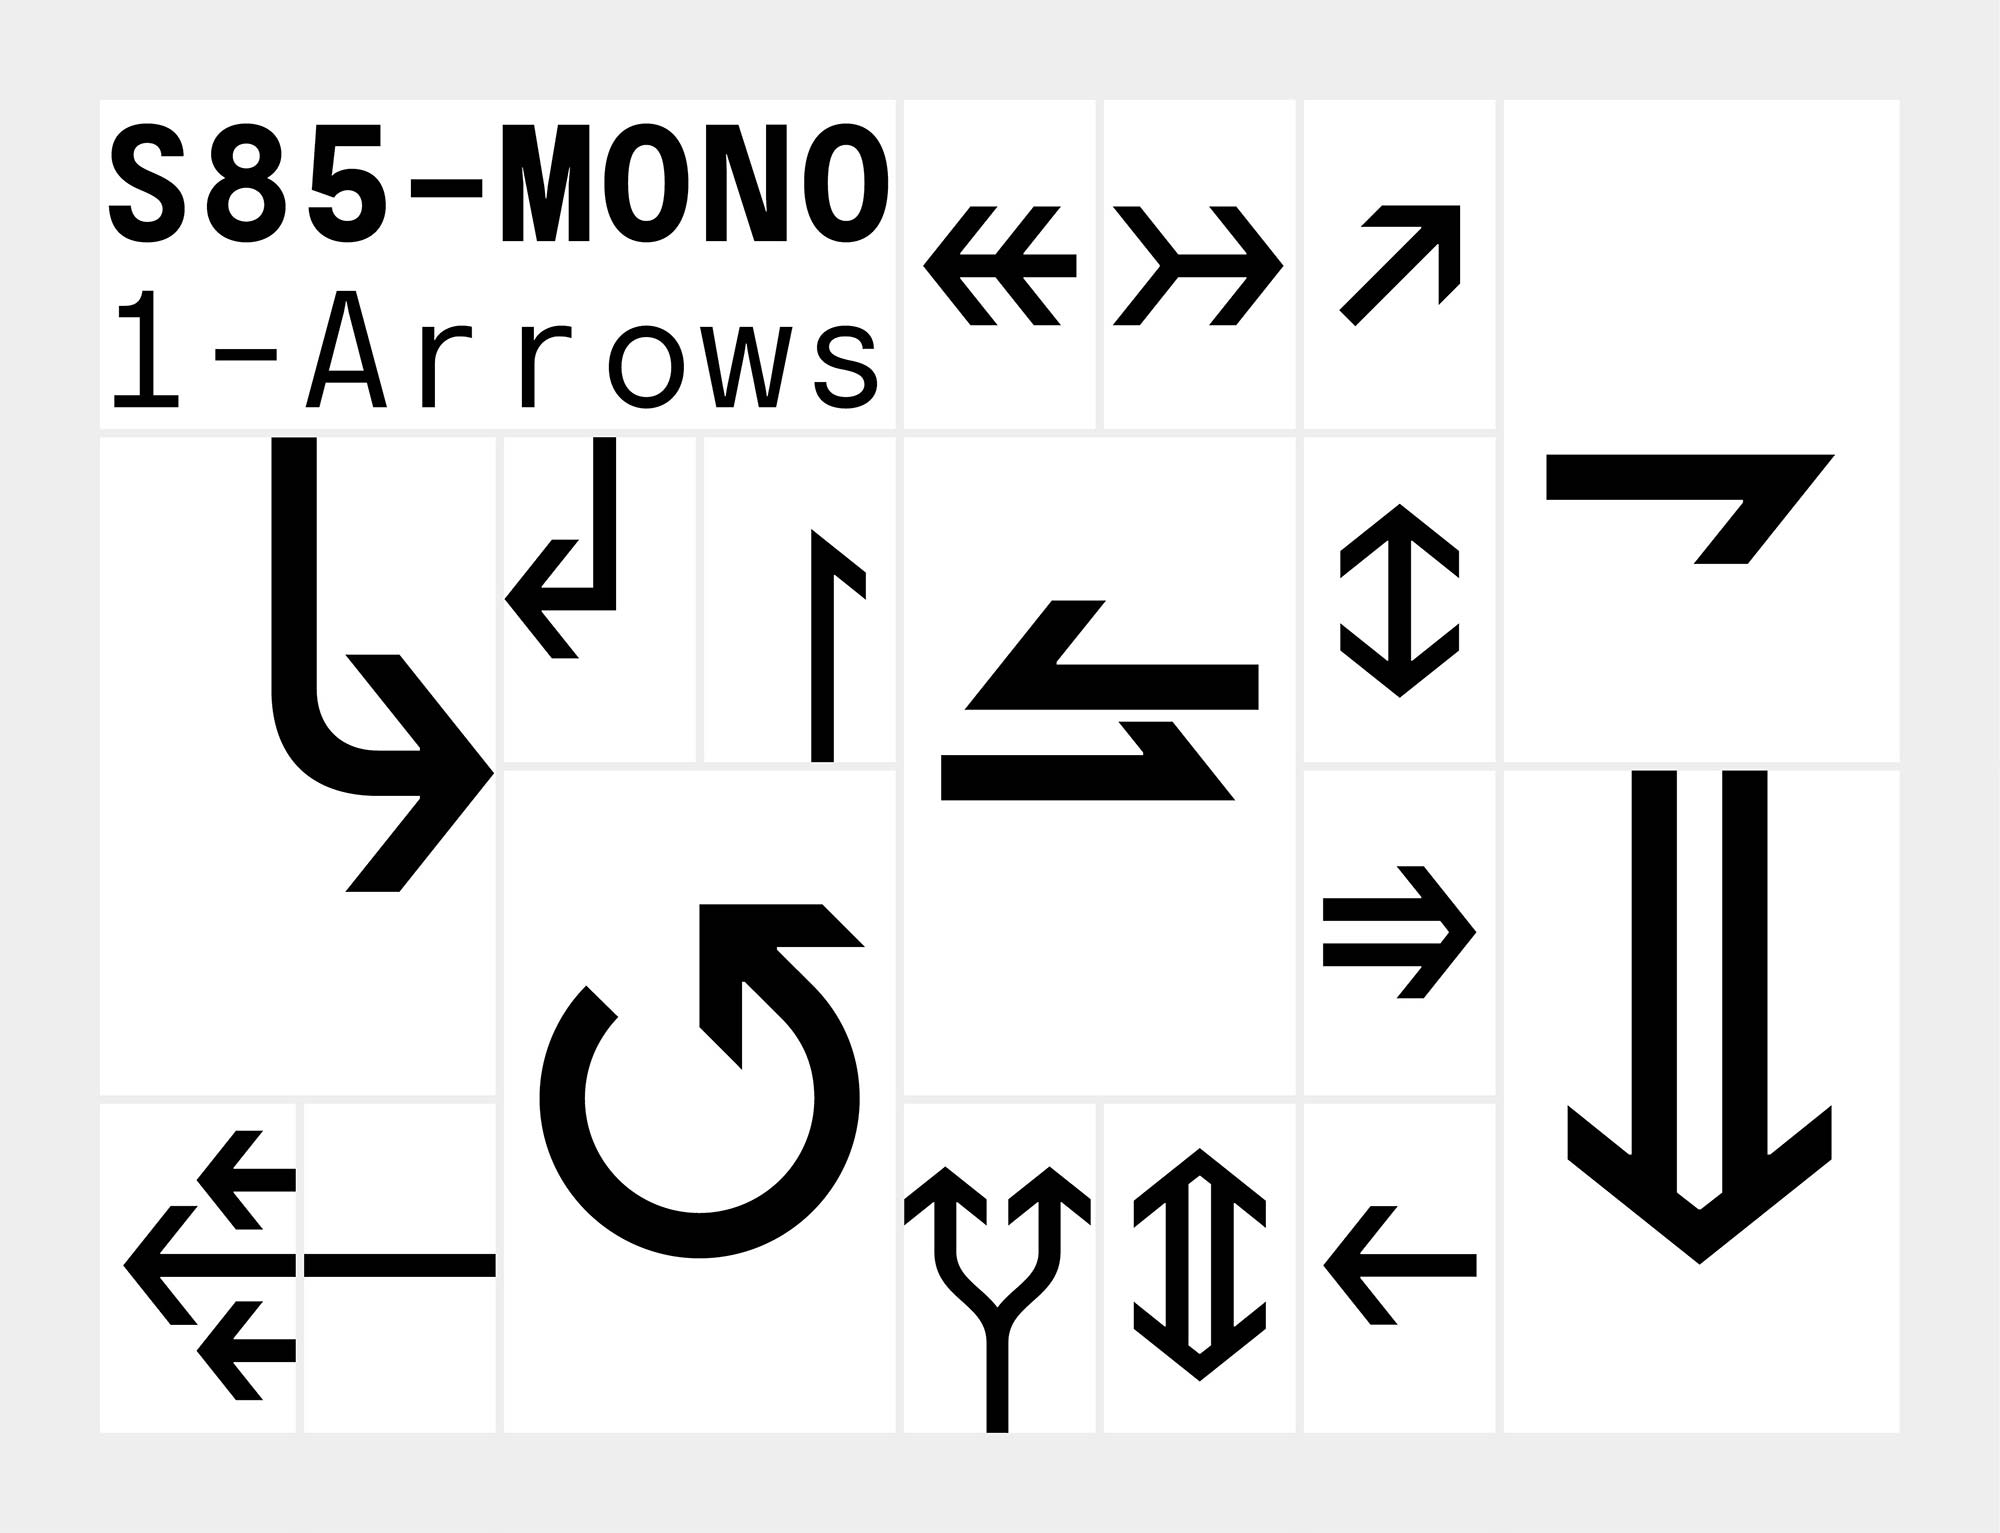 S85 mono arrows